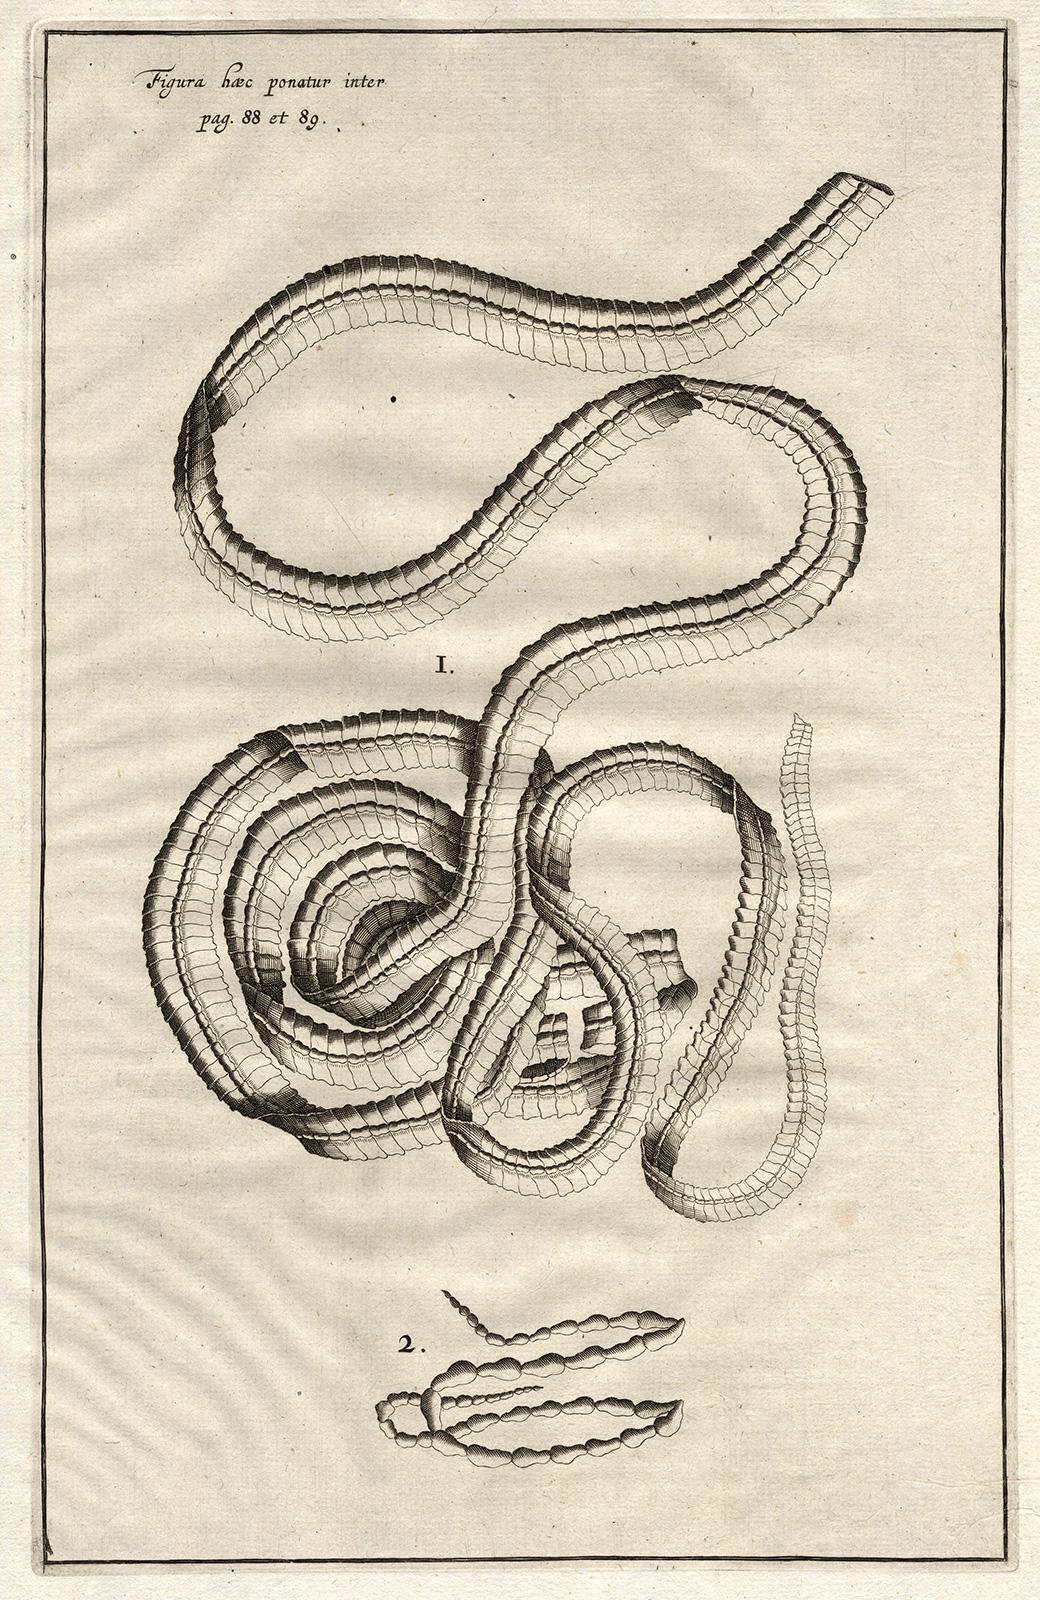 Adrianus Spigelius Print - 2 Anatomical prints - tapeworms - by Spigelius - Engraving - 17th c